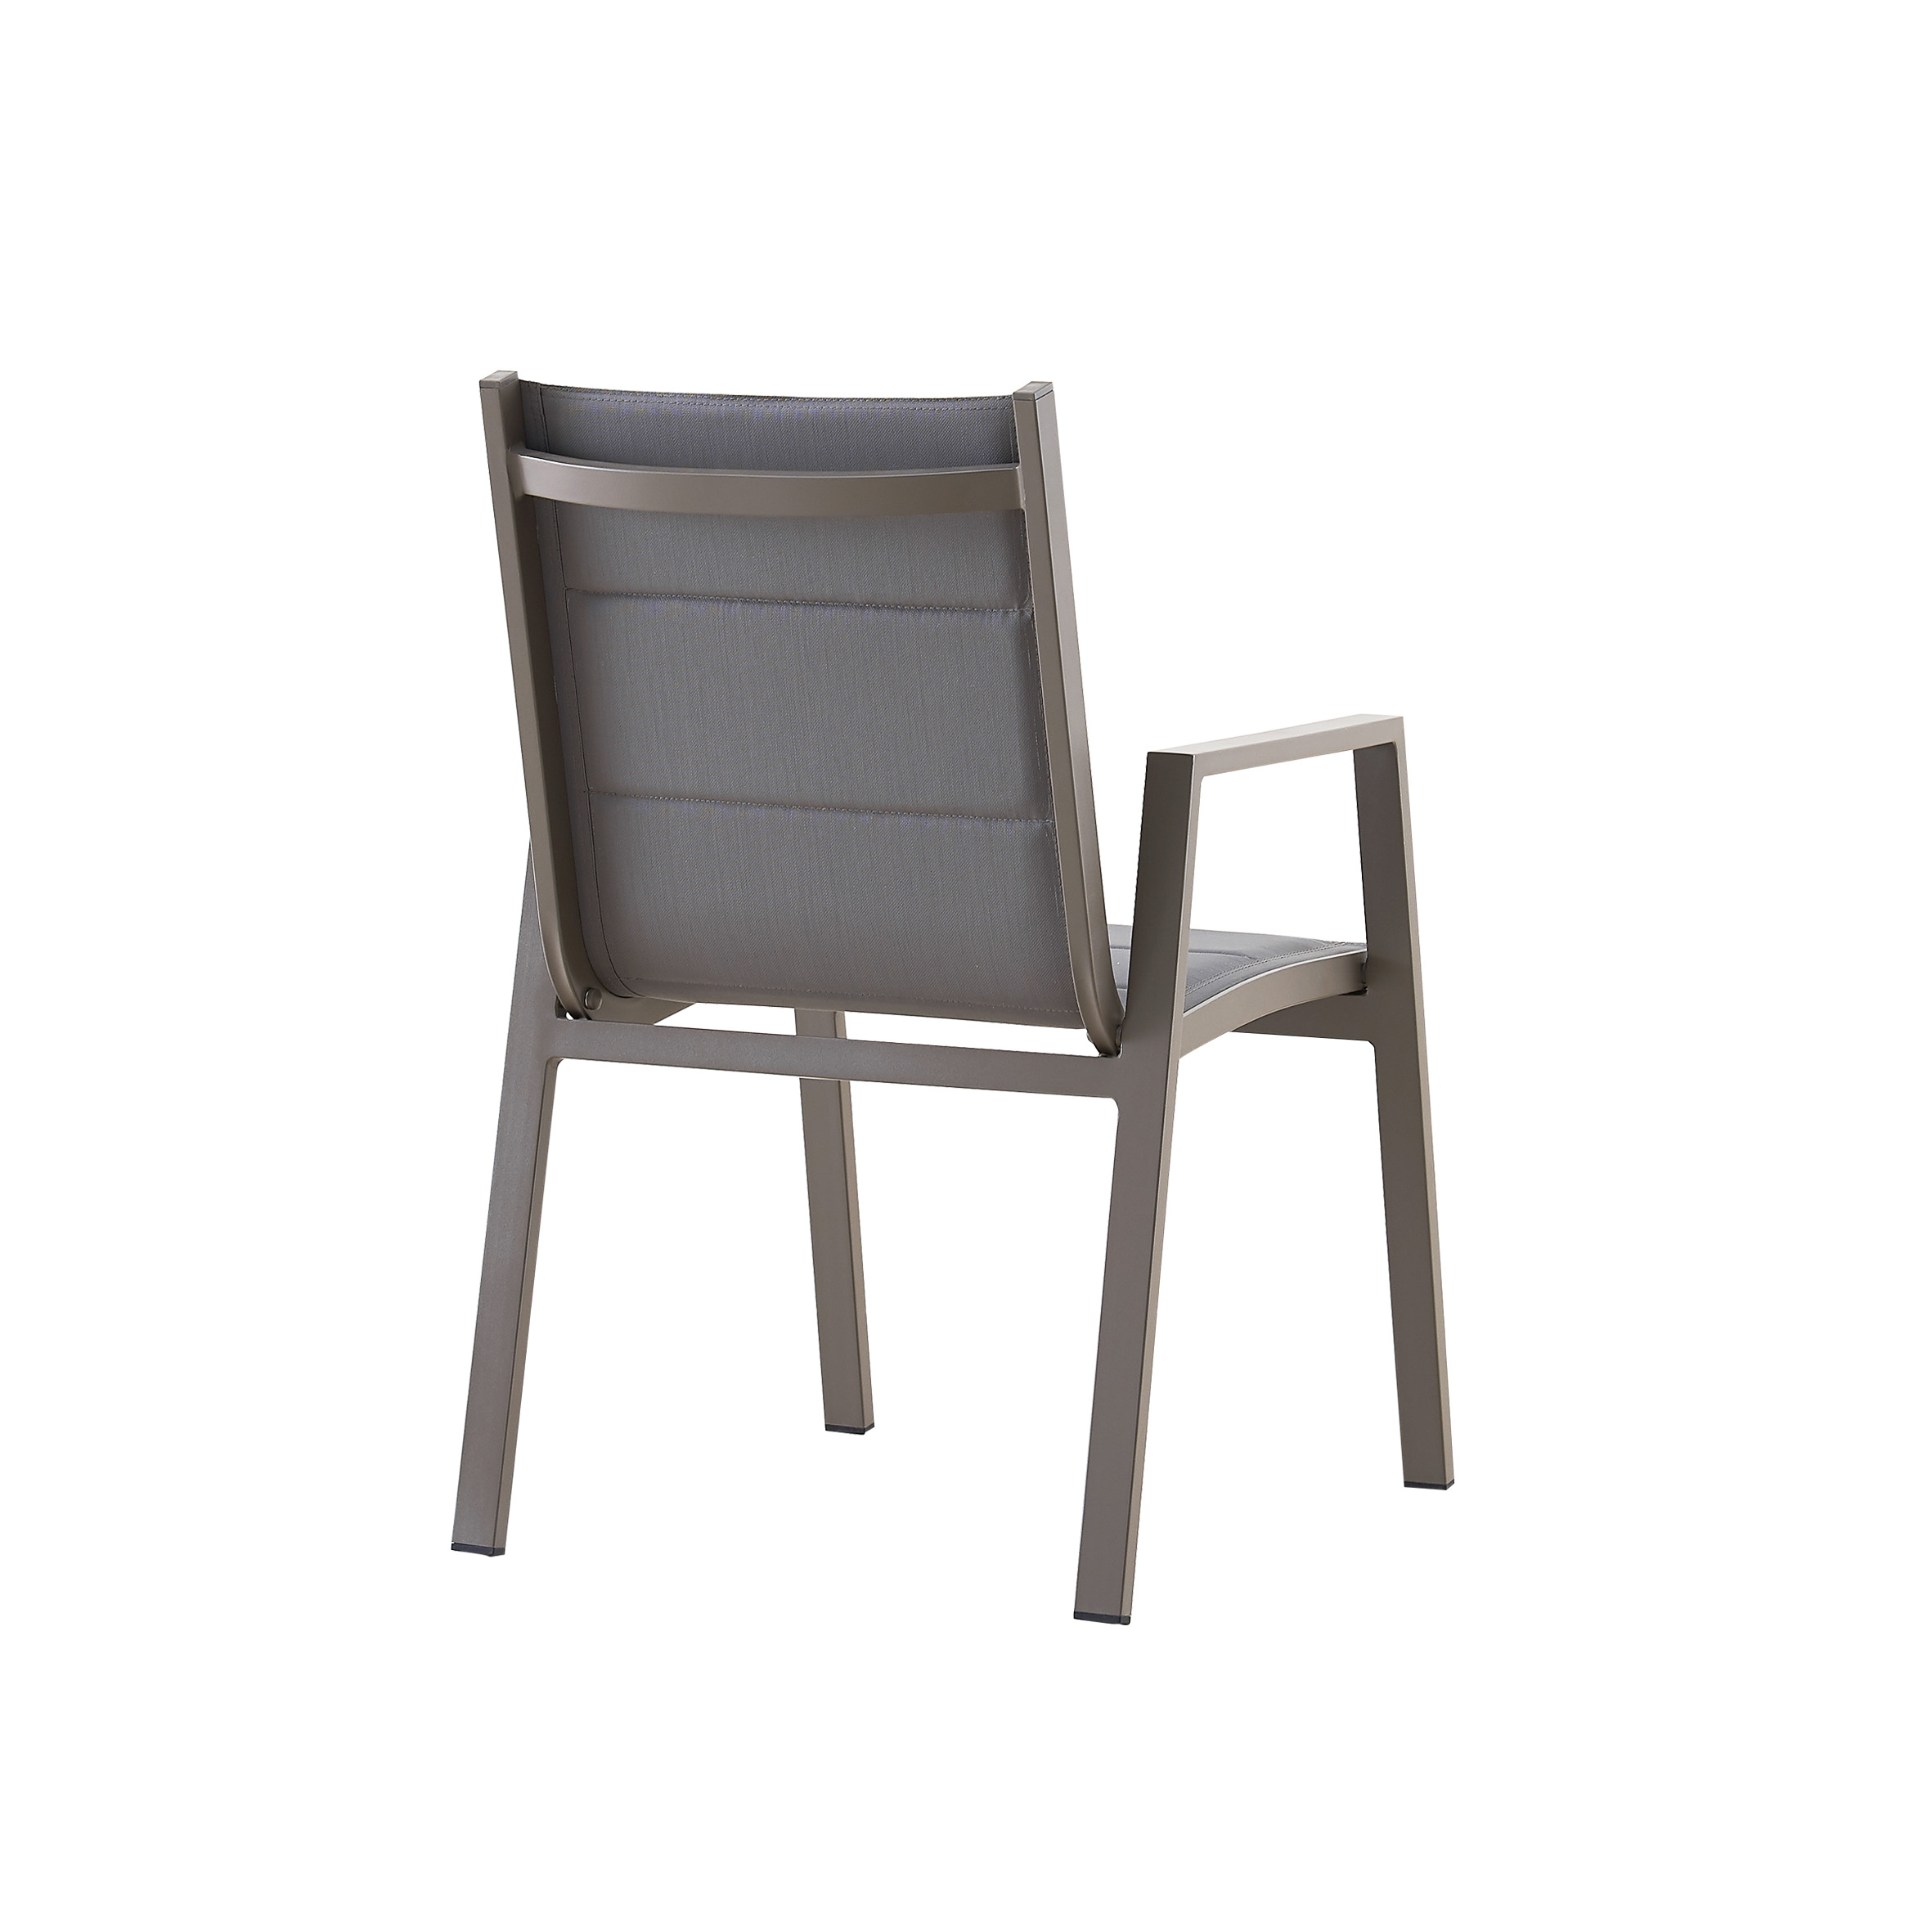 Snow white textile chair S3